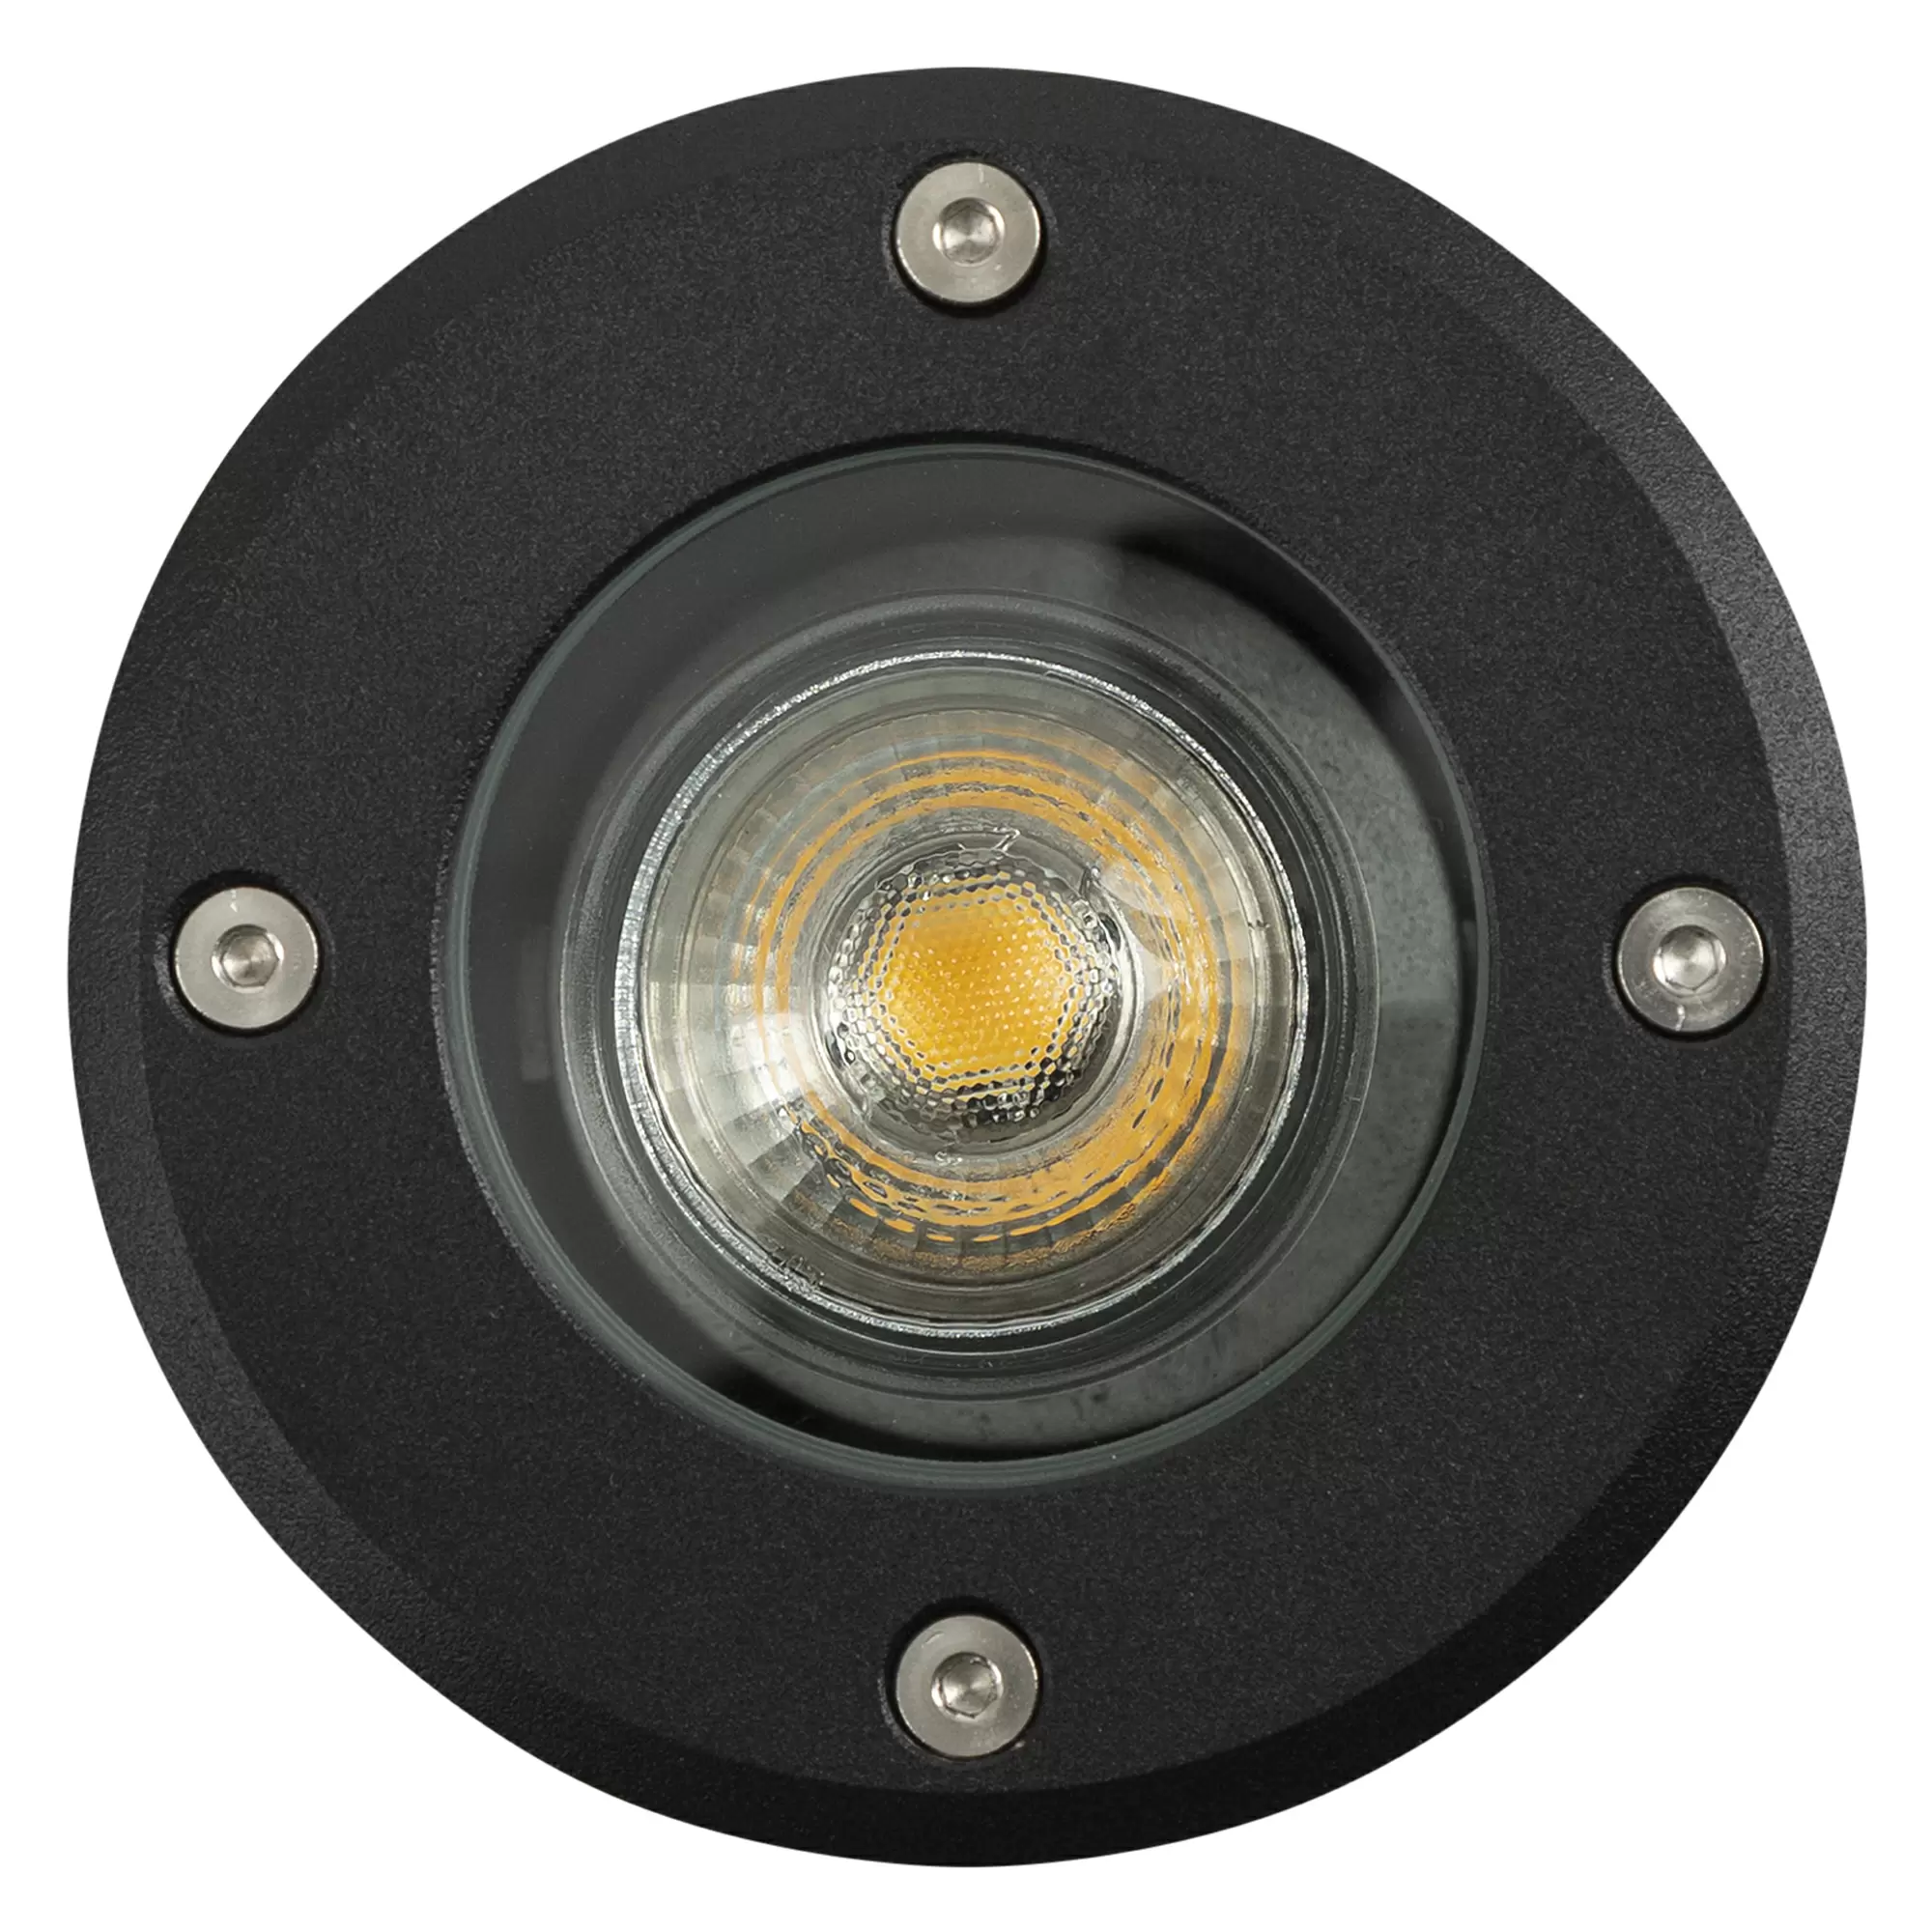 Groping remove Torrent Inground light GU10 black| Official site KS outdoor lighting company